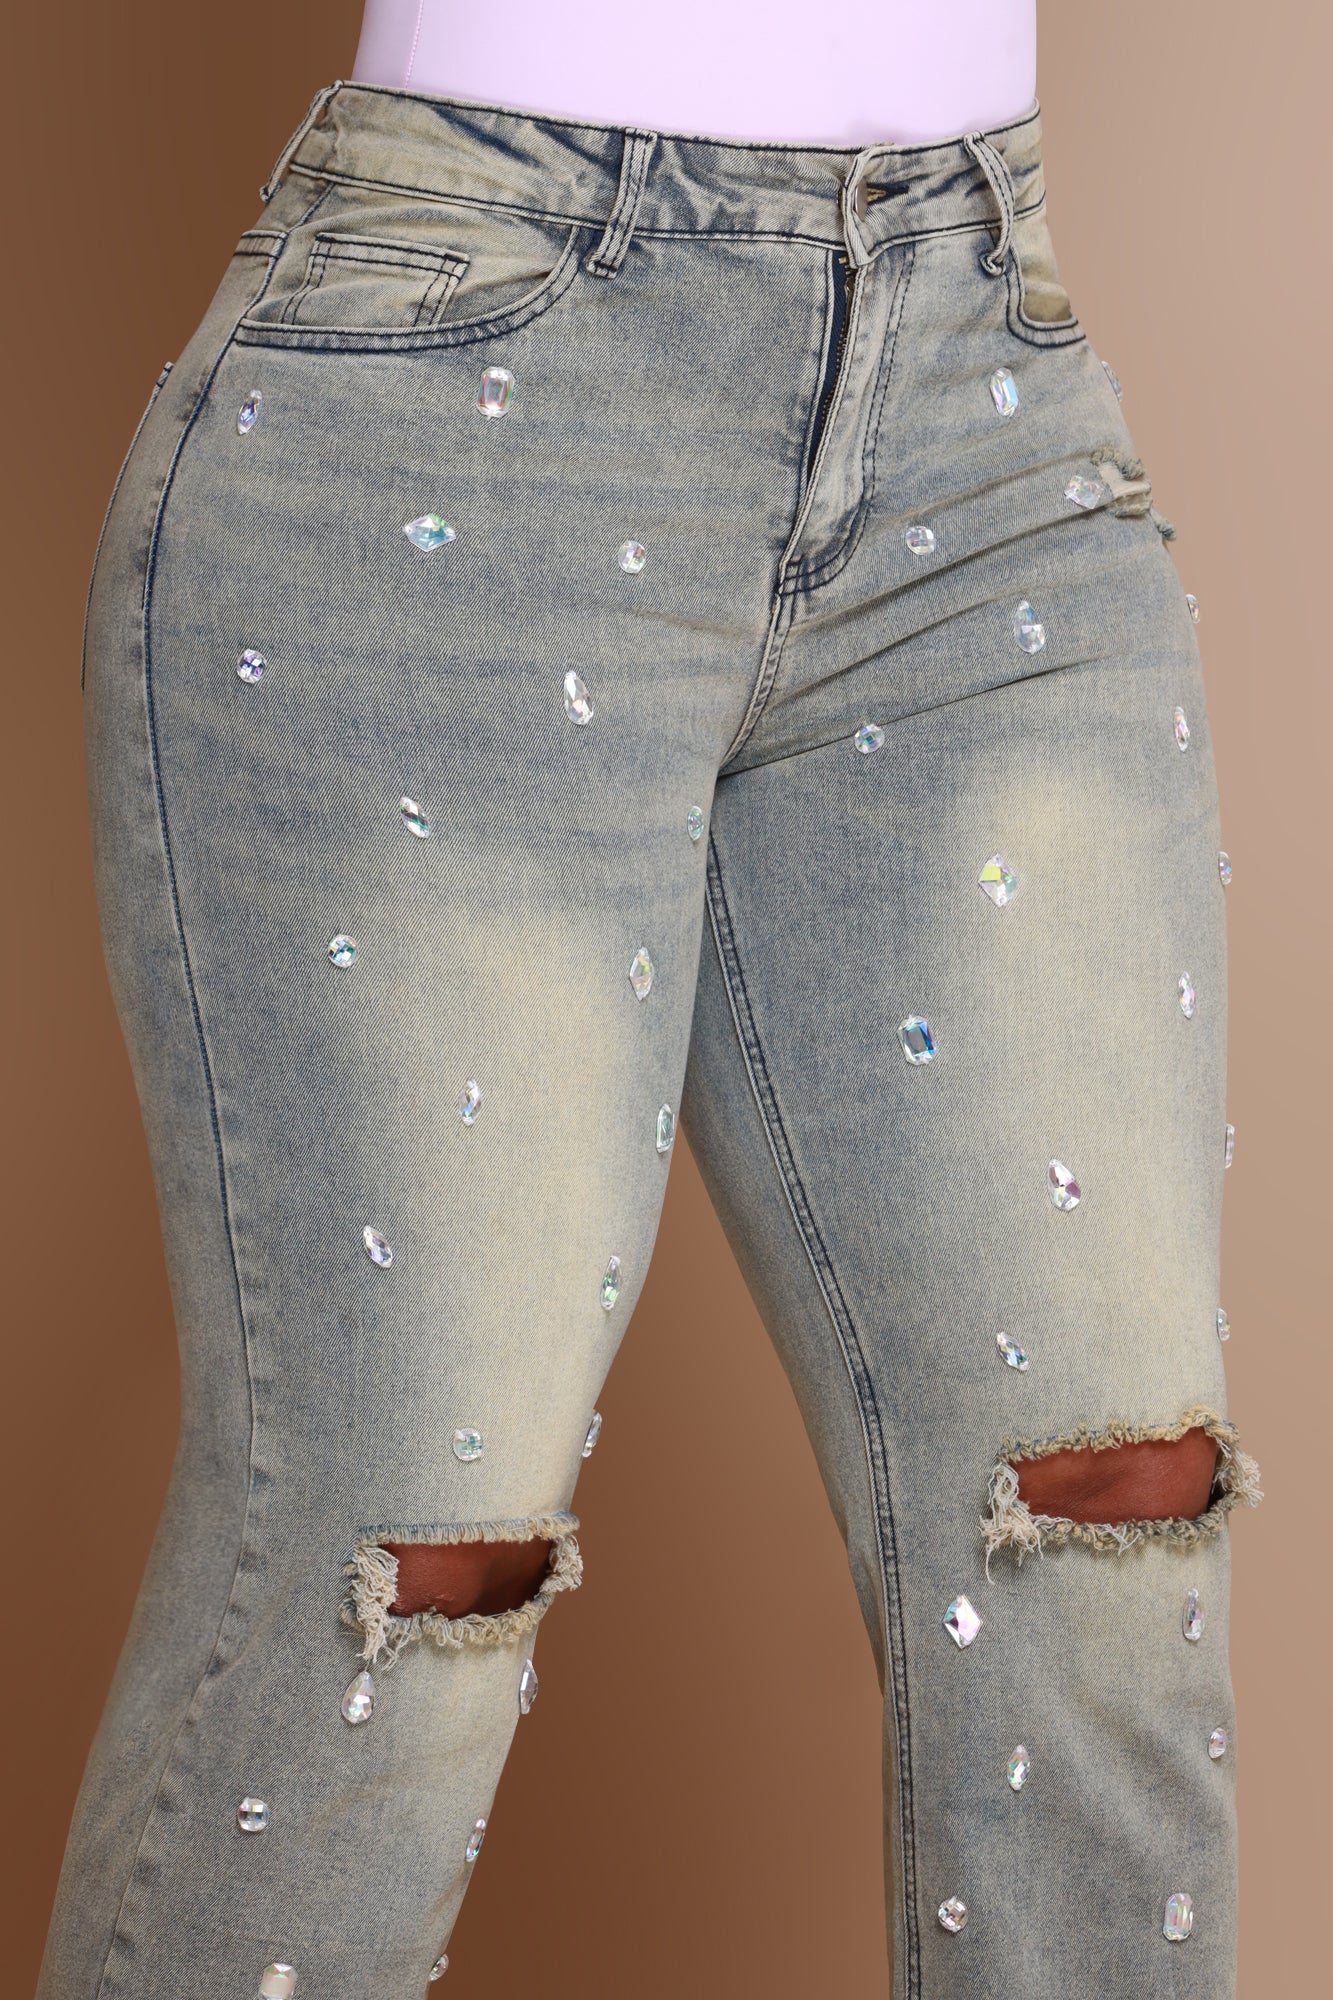 Thunder Rolls Rhinestone Embellished Ripped Jeans - Vintage Wash - Swank A Posh